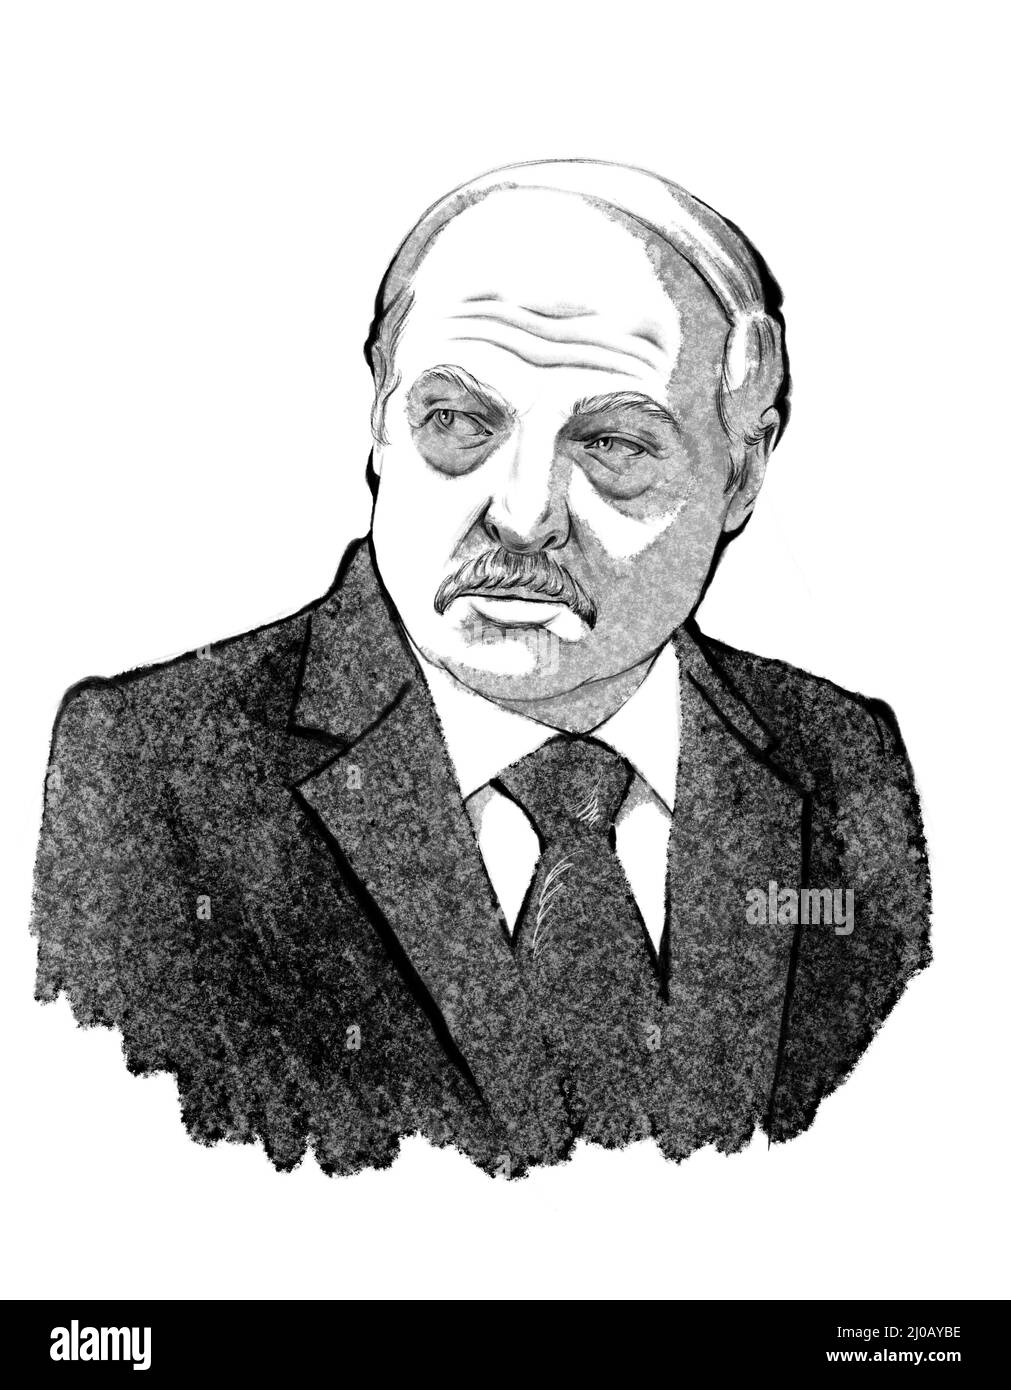 President of Belarus Alexander Lukashenko portrait illustration. Stock Photo